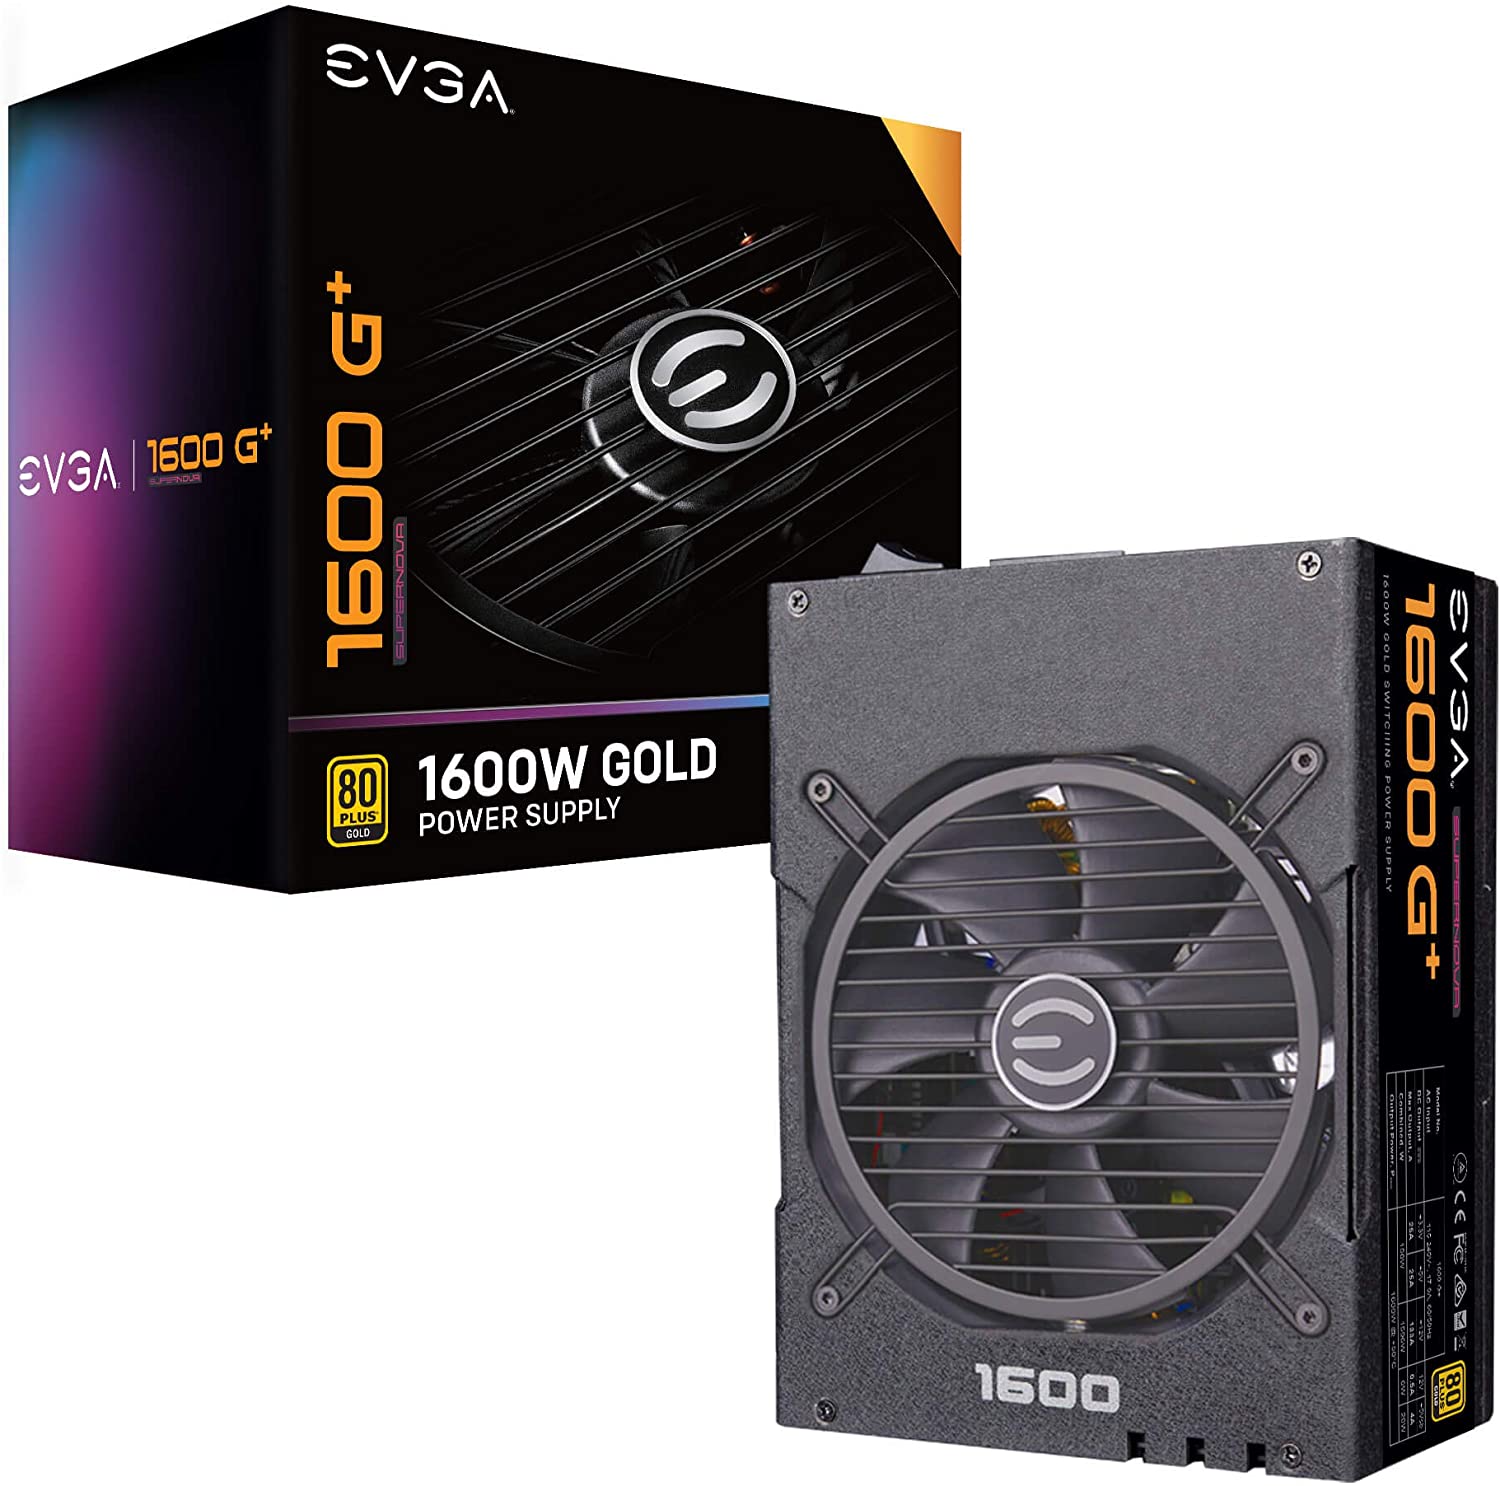 EVGA SuperNOVA 1600 G+ 1600W 80 Plus Gold Fully Modular Power Supply $300 + Free Shipping